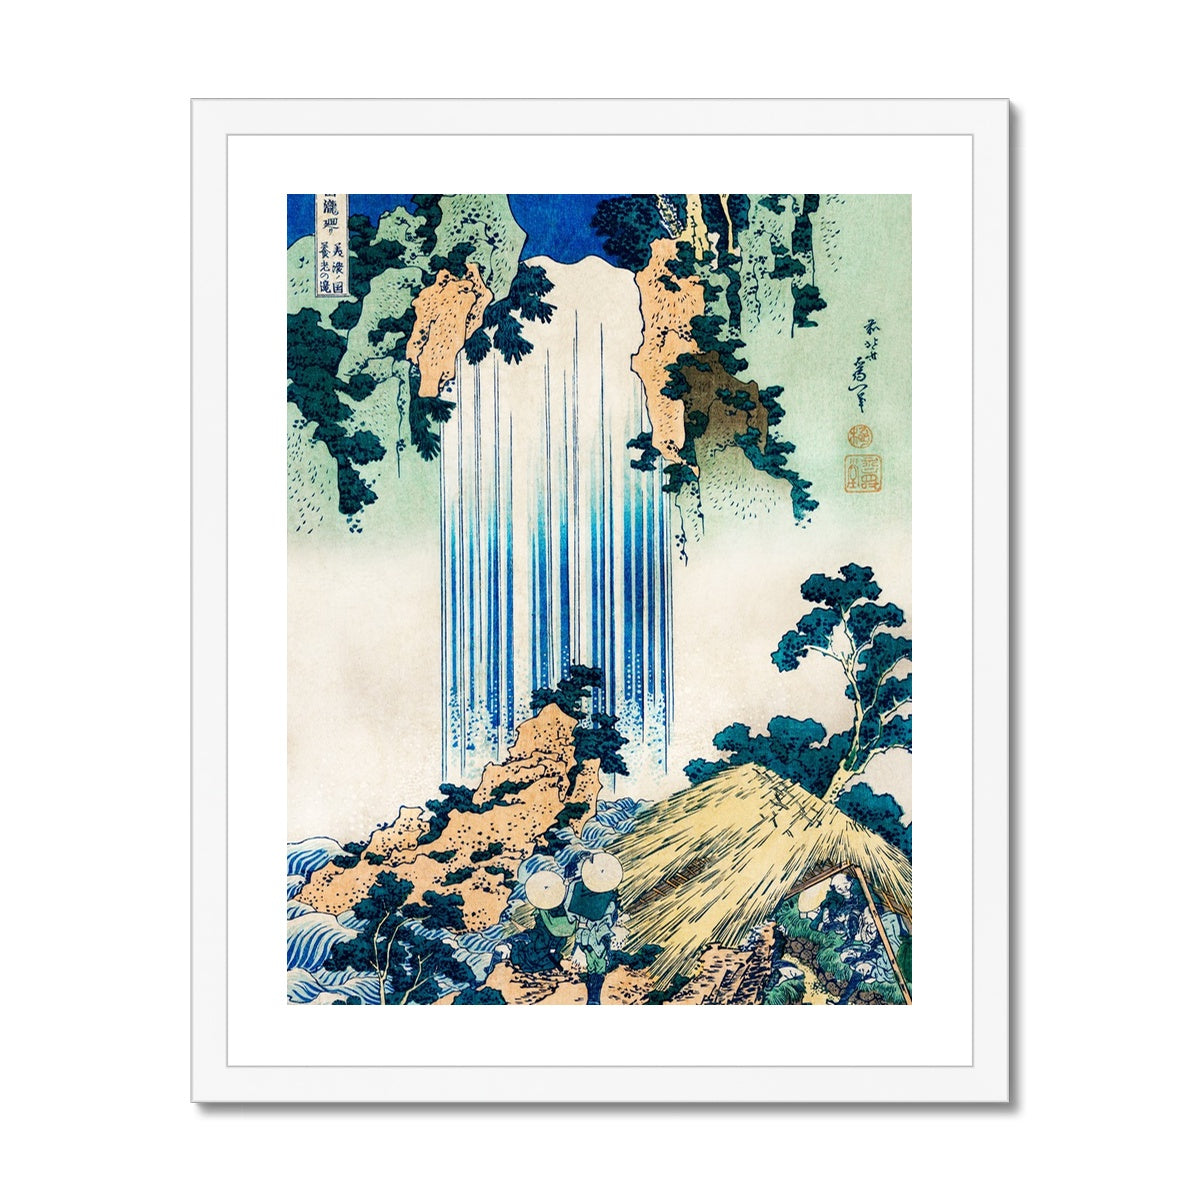 Hokusai - The Yoro Waterfall gerahmtes Poster - Atopurinto